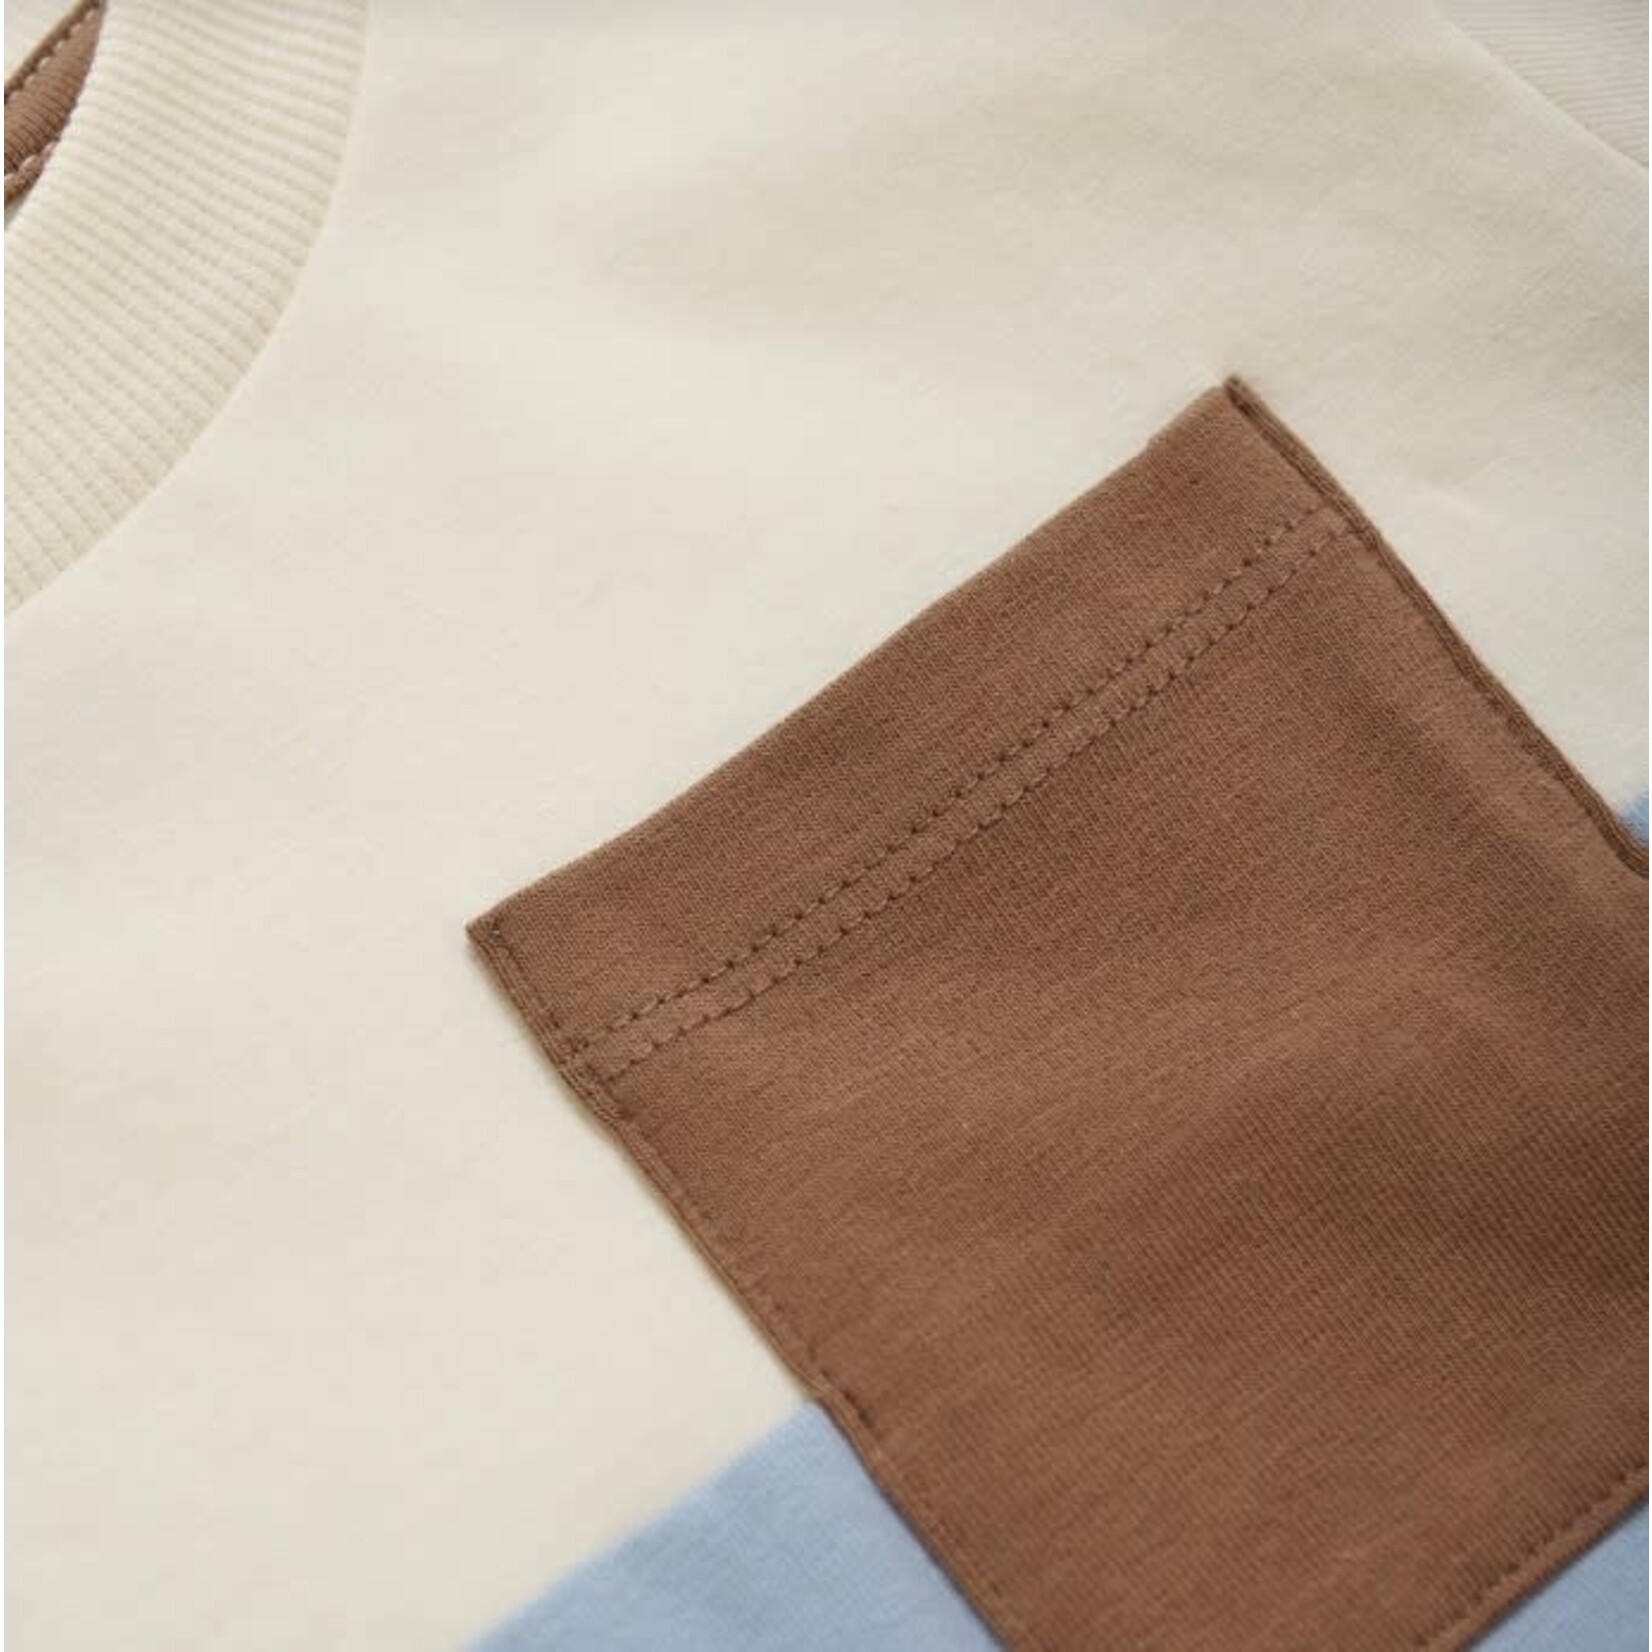 Enfant ENFANT - Shortsleeve colour block t-shirt white and blue with brown pocket